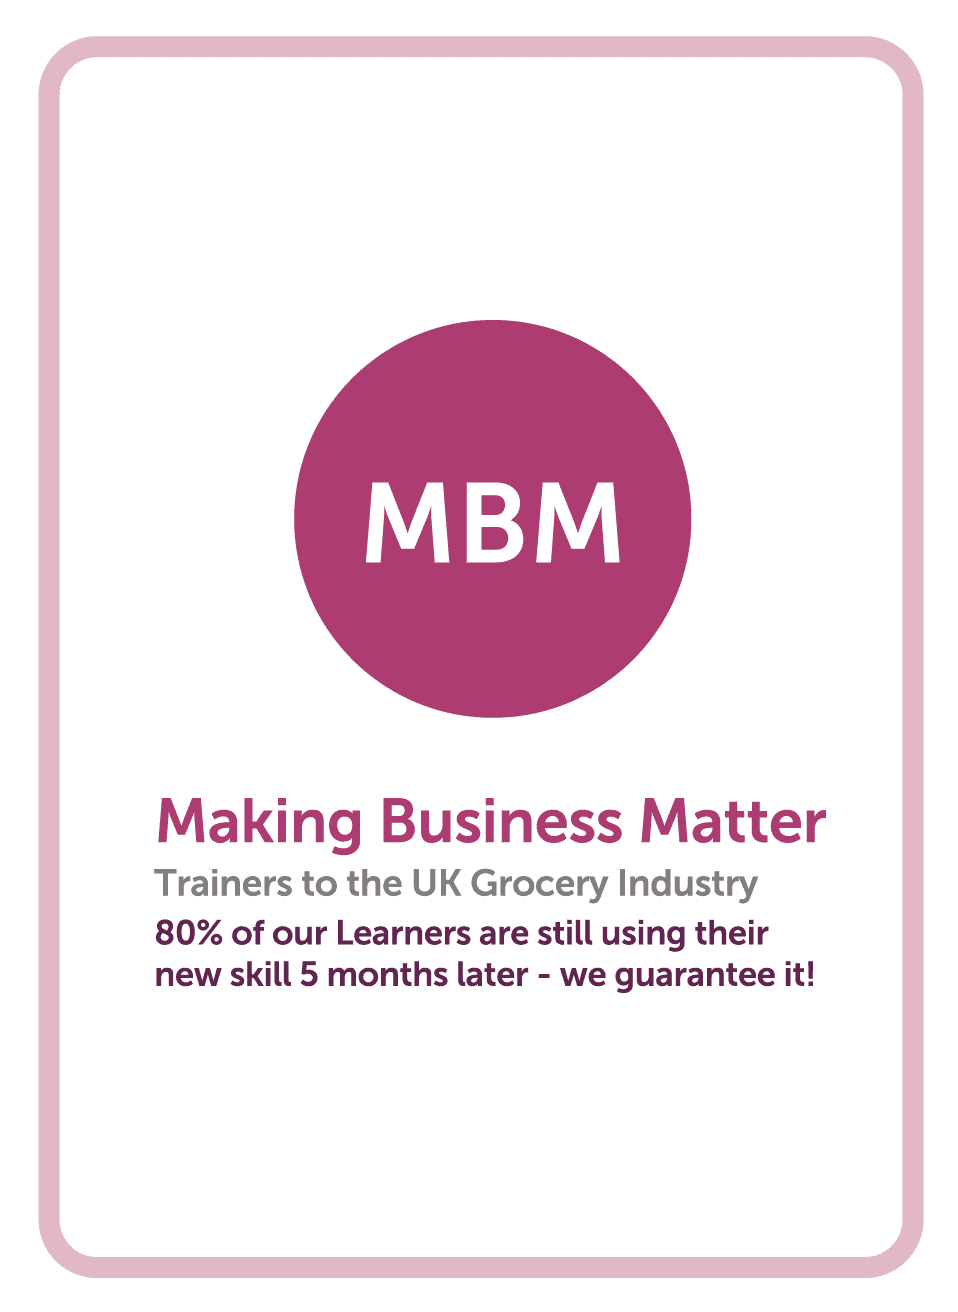 Coaching card with MBM logo